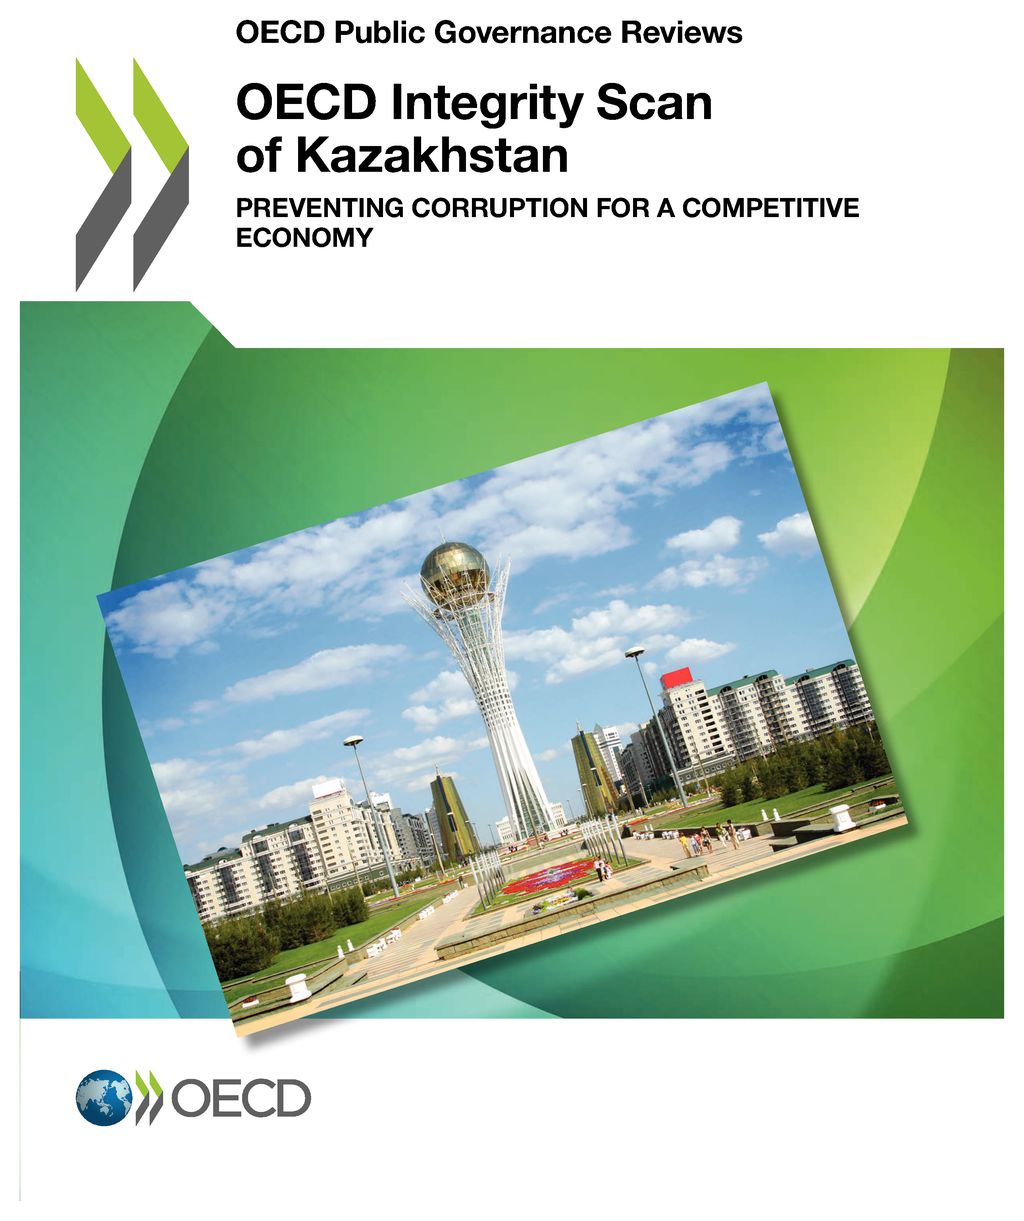 KAZACHSTAN